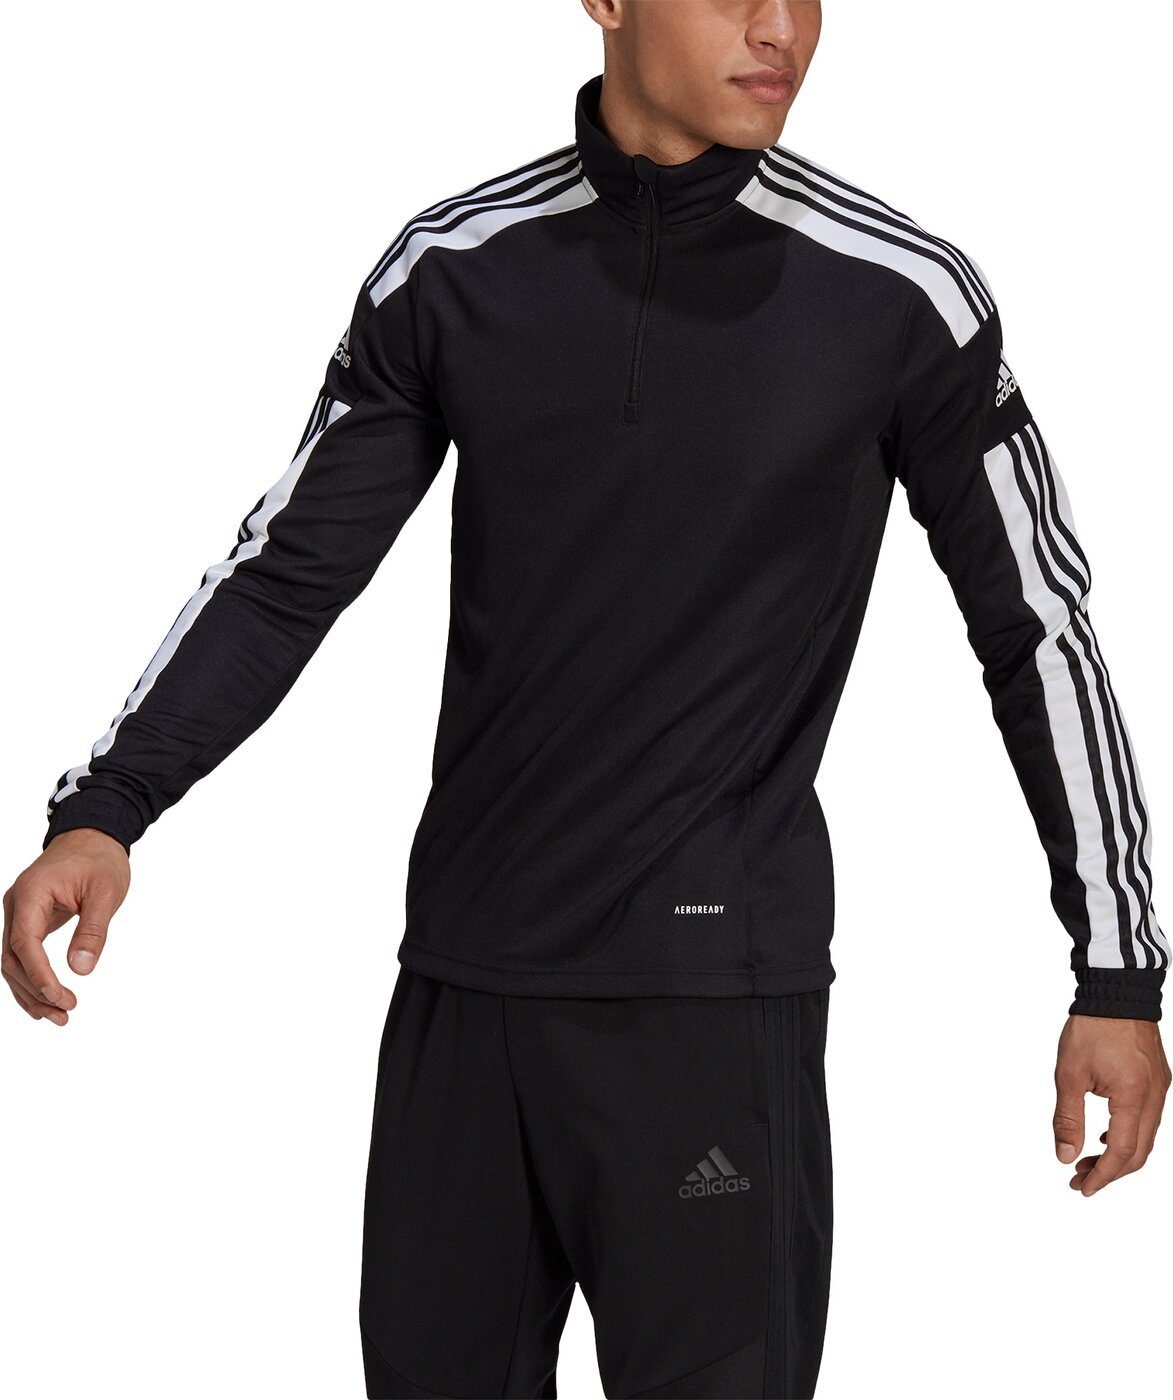 TOP BLACK/WHITE schwarzweiss adidas TR Sportswear Trainingsshirt Performance adidas SQ21